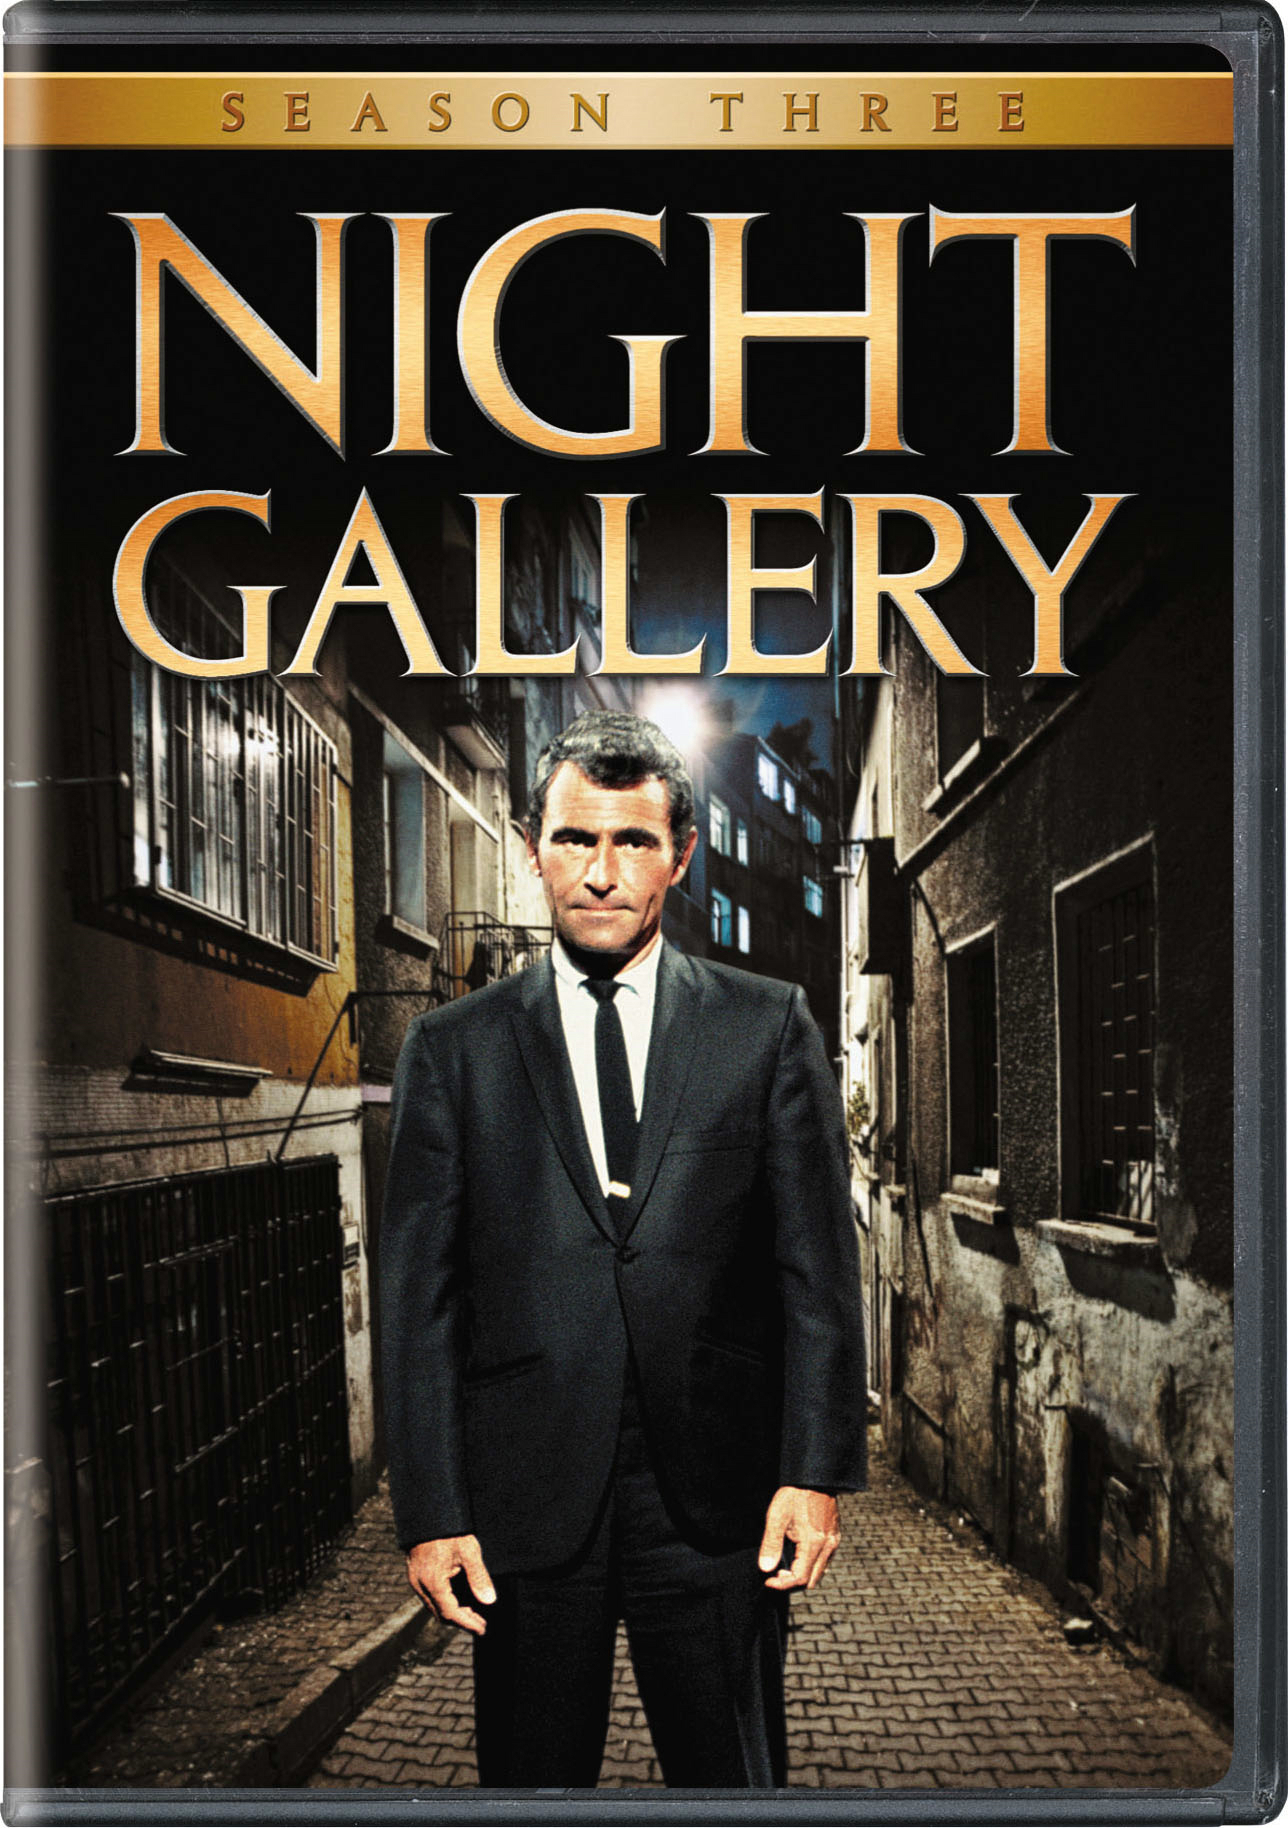 Night Gallery: Season 3 - DVD [ 1973 ]  - Sci Fi Television On DVD - TV Shows On GRUV